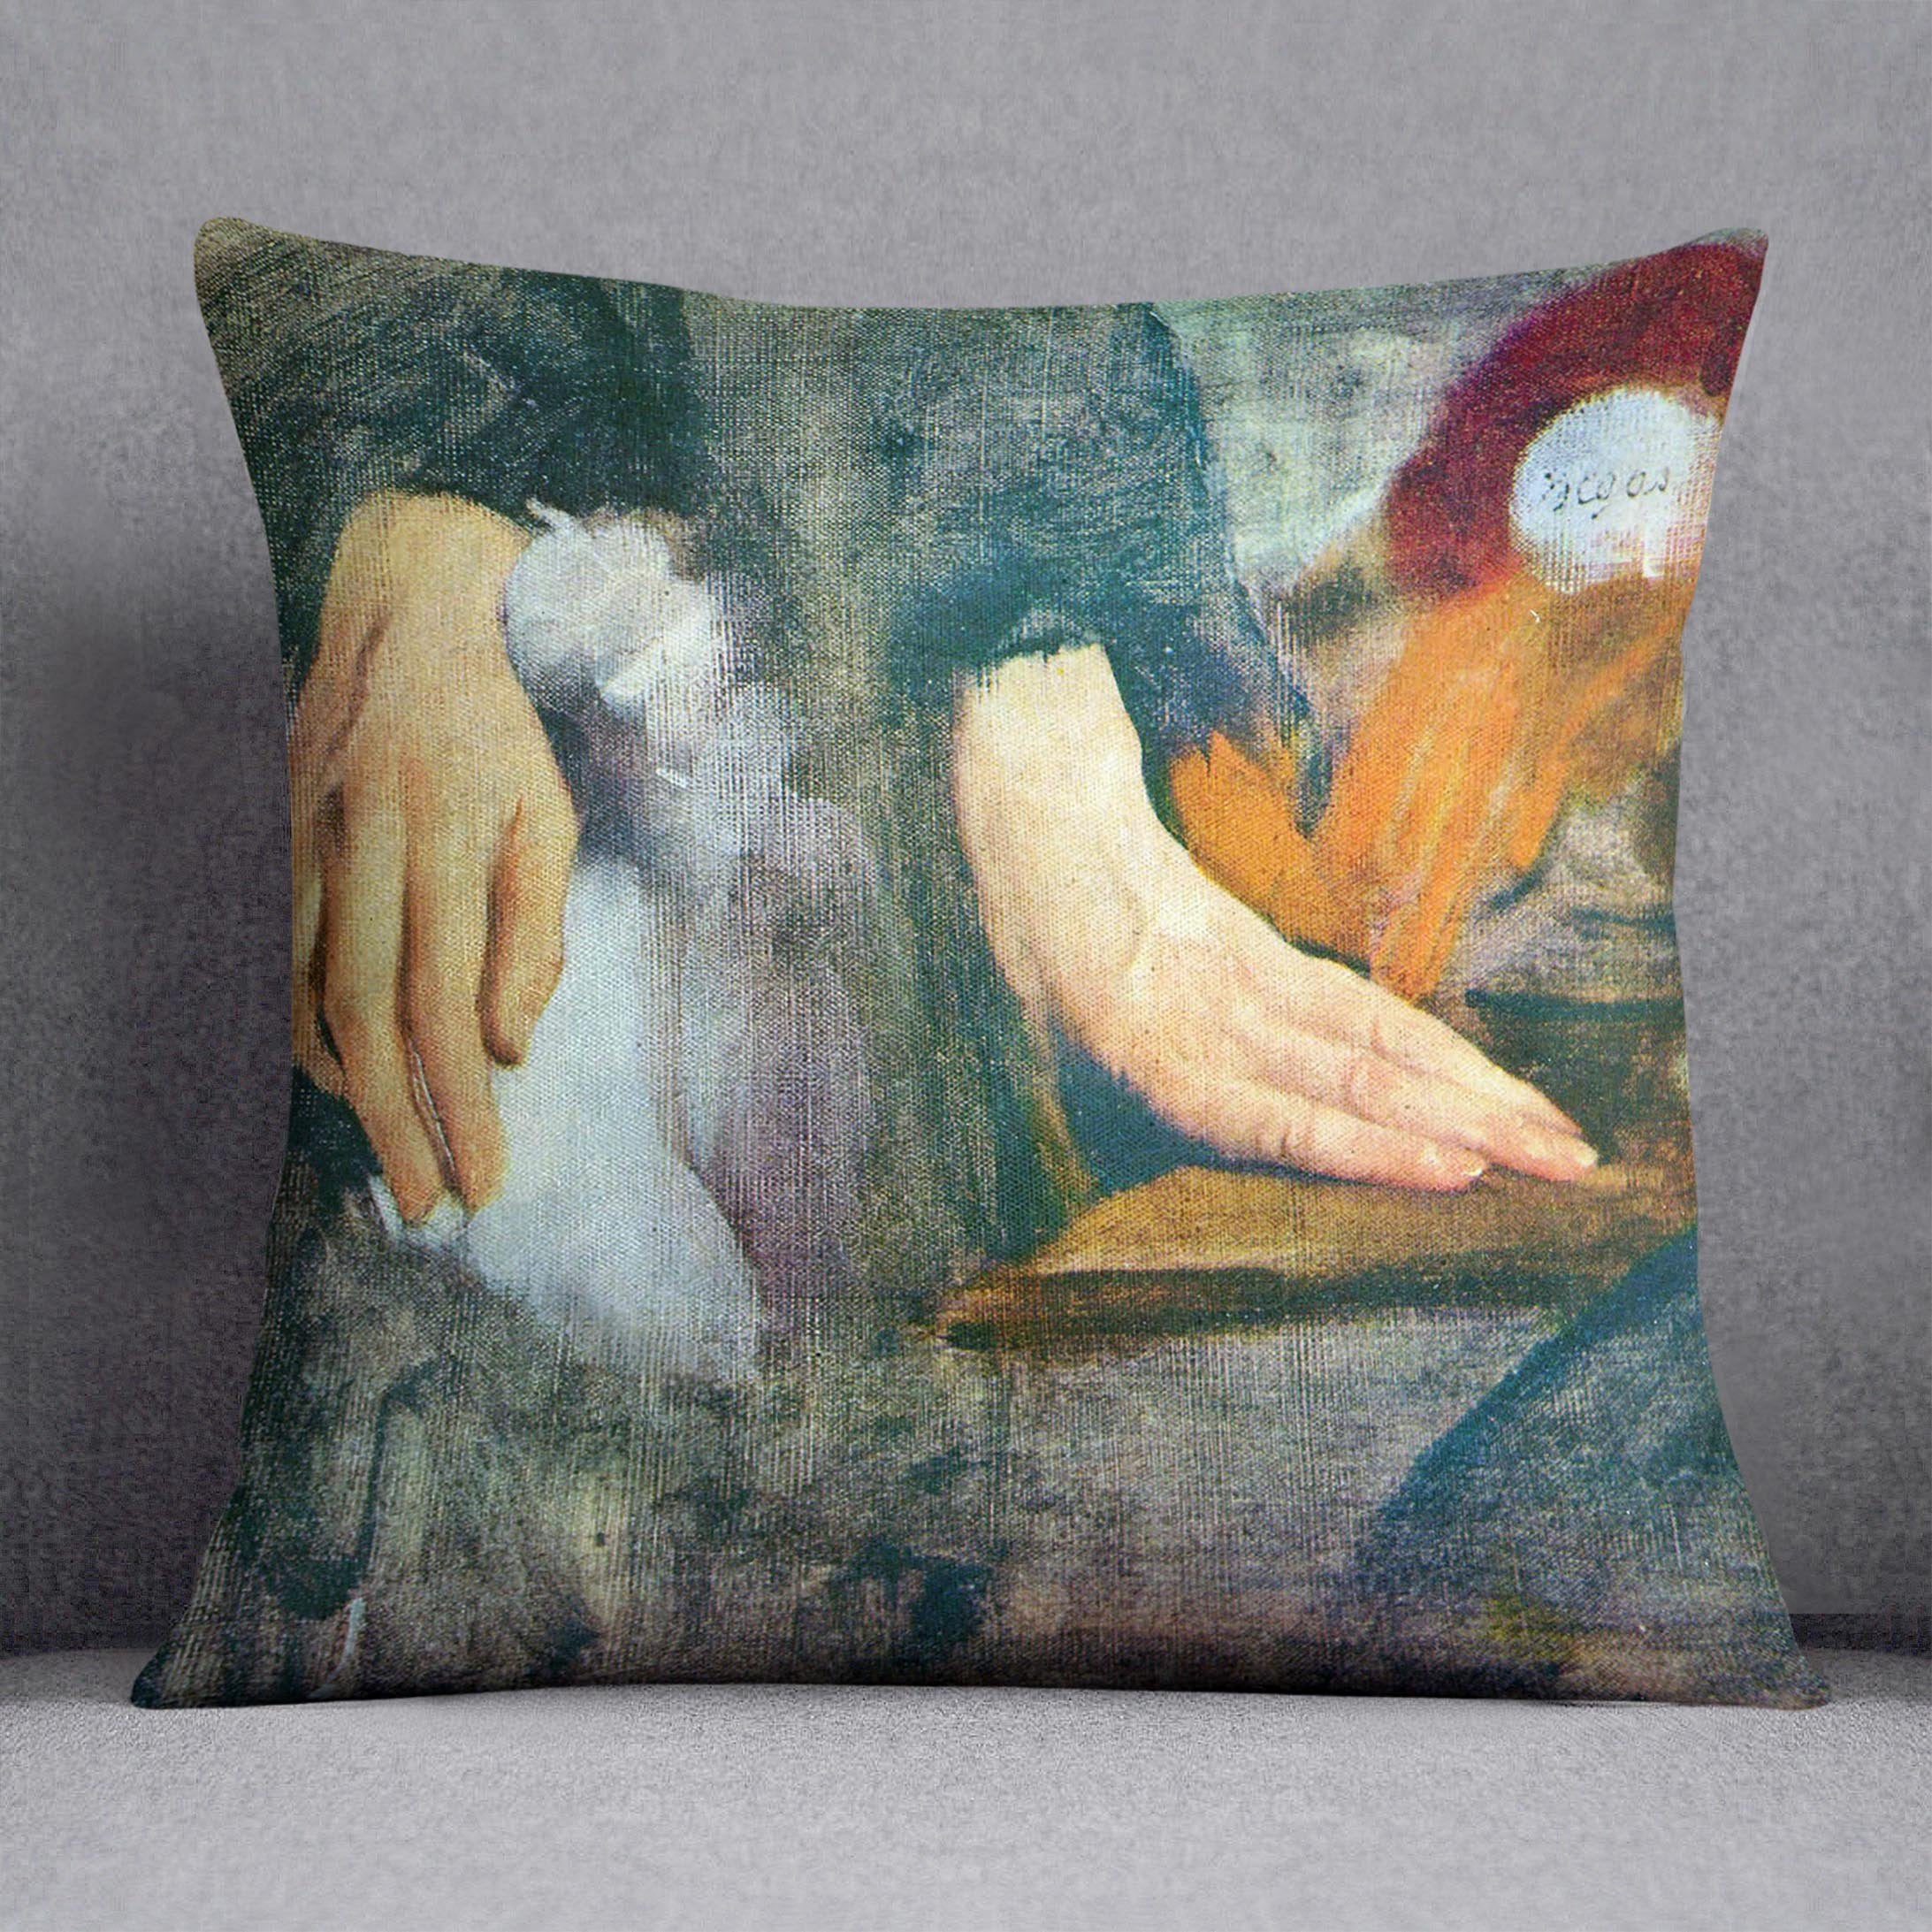 Hand Study by Degas Cushion